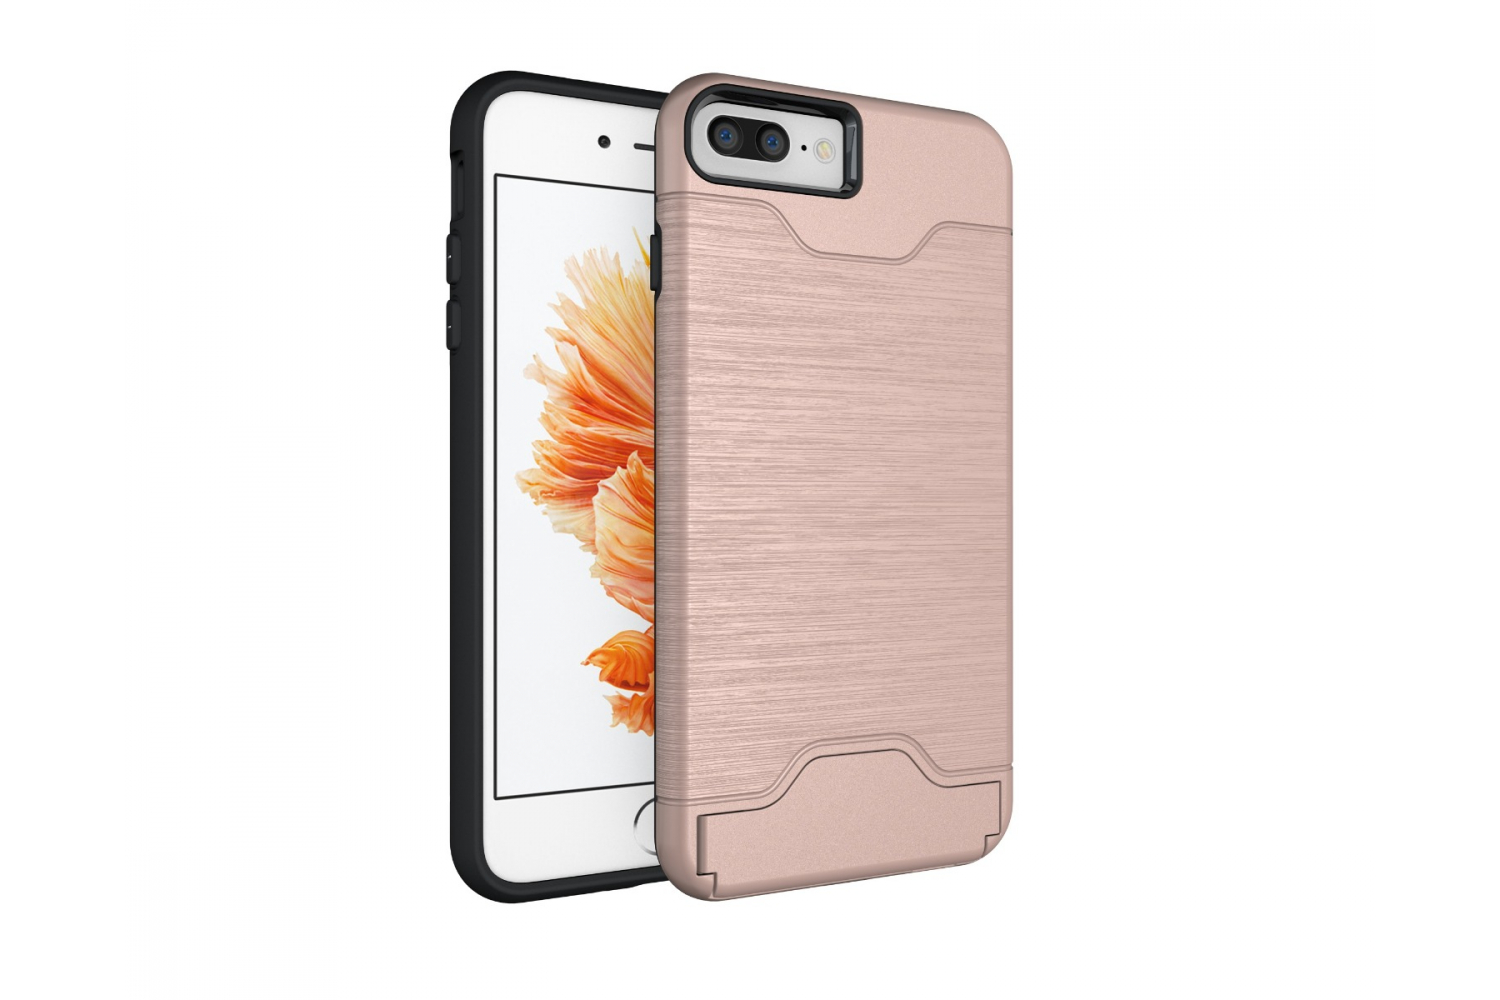 Iphone 8 Plus Back Cover Case Rose goud